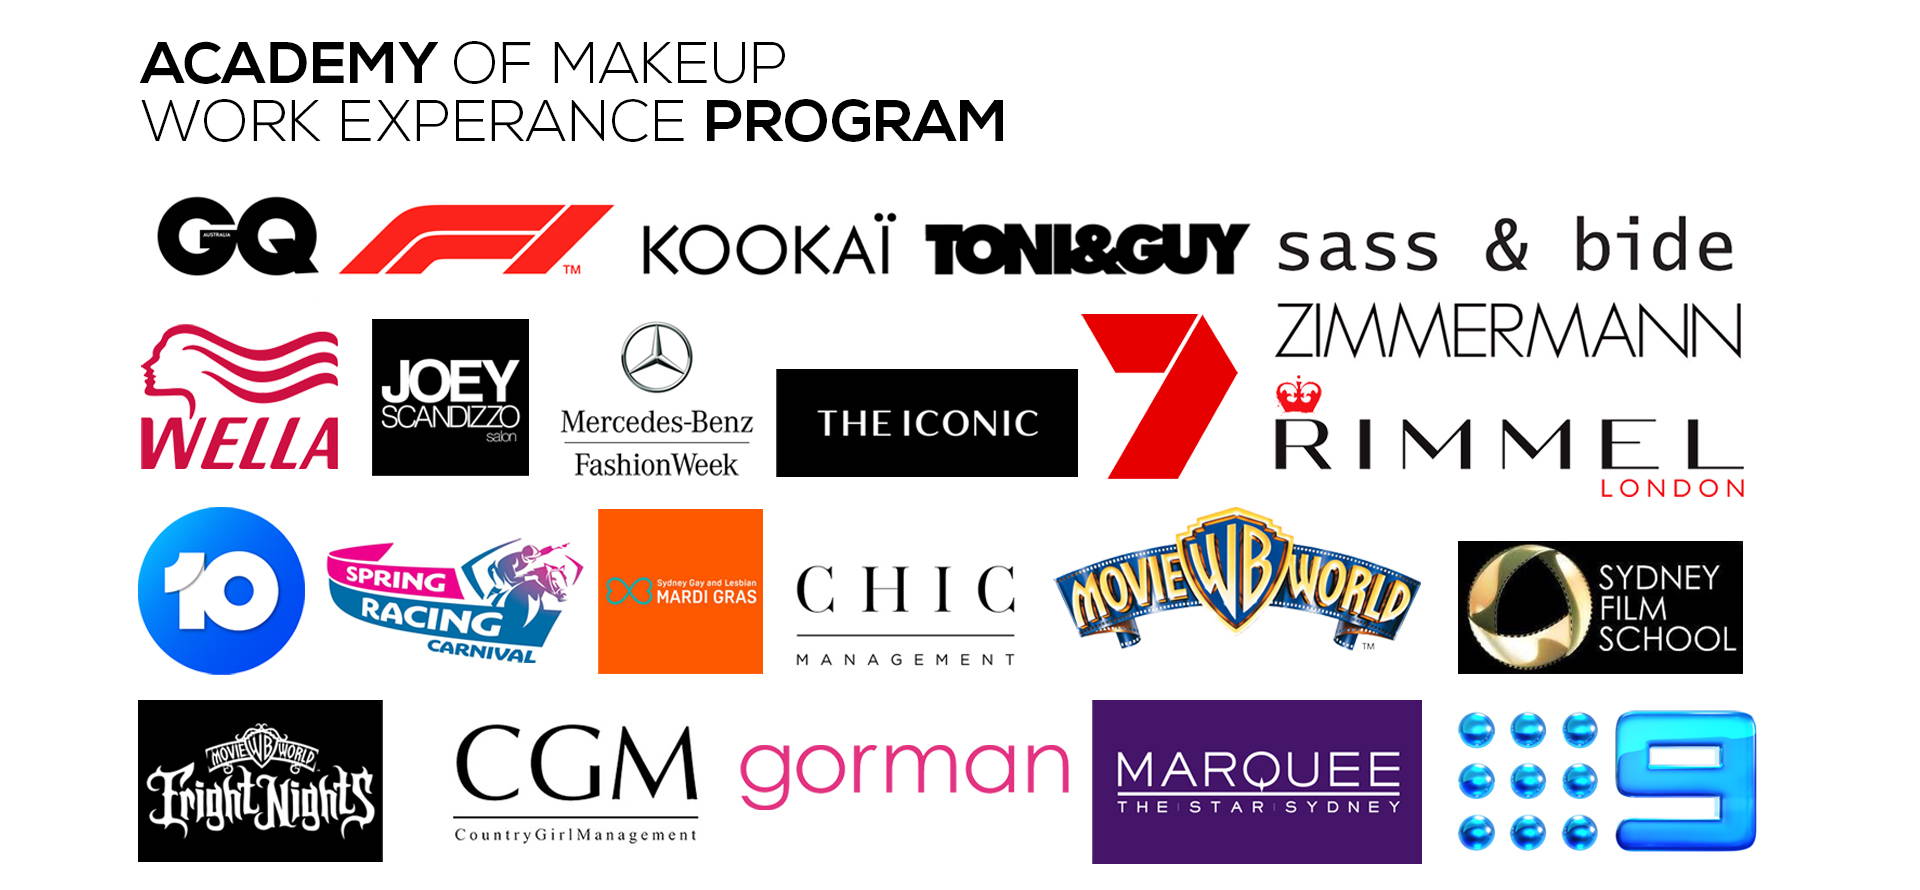 Work Experience Program Academy Of Makeup